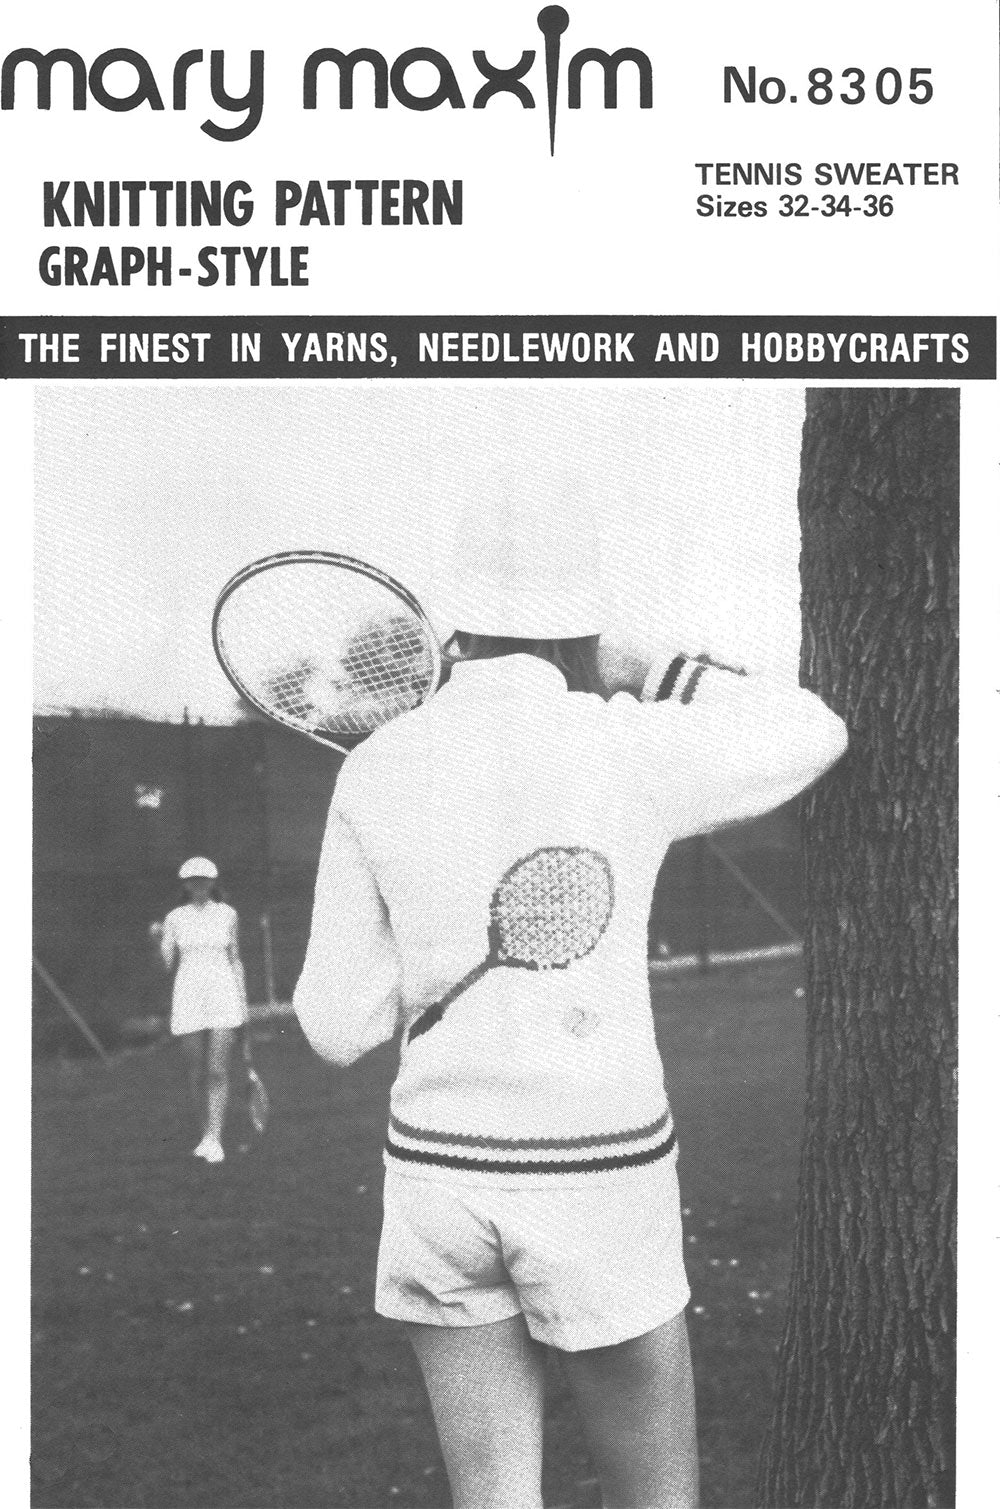 Tennis Sweater Pattern